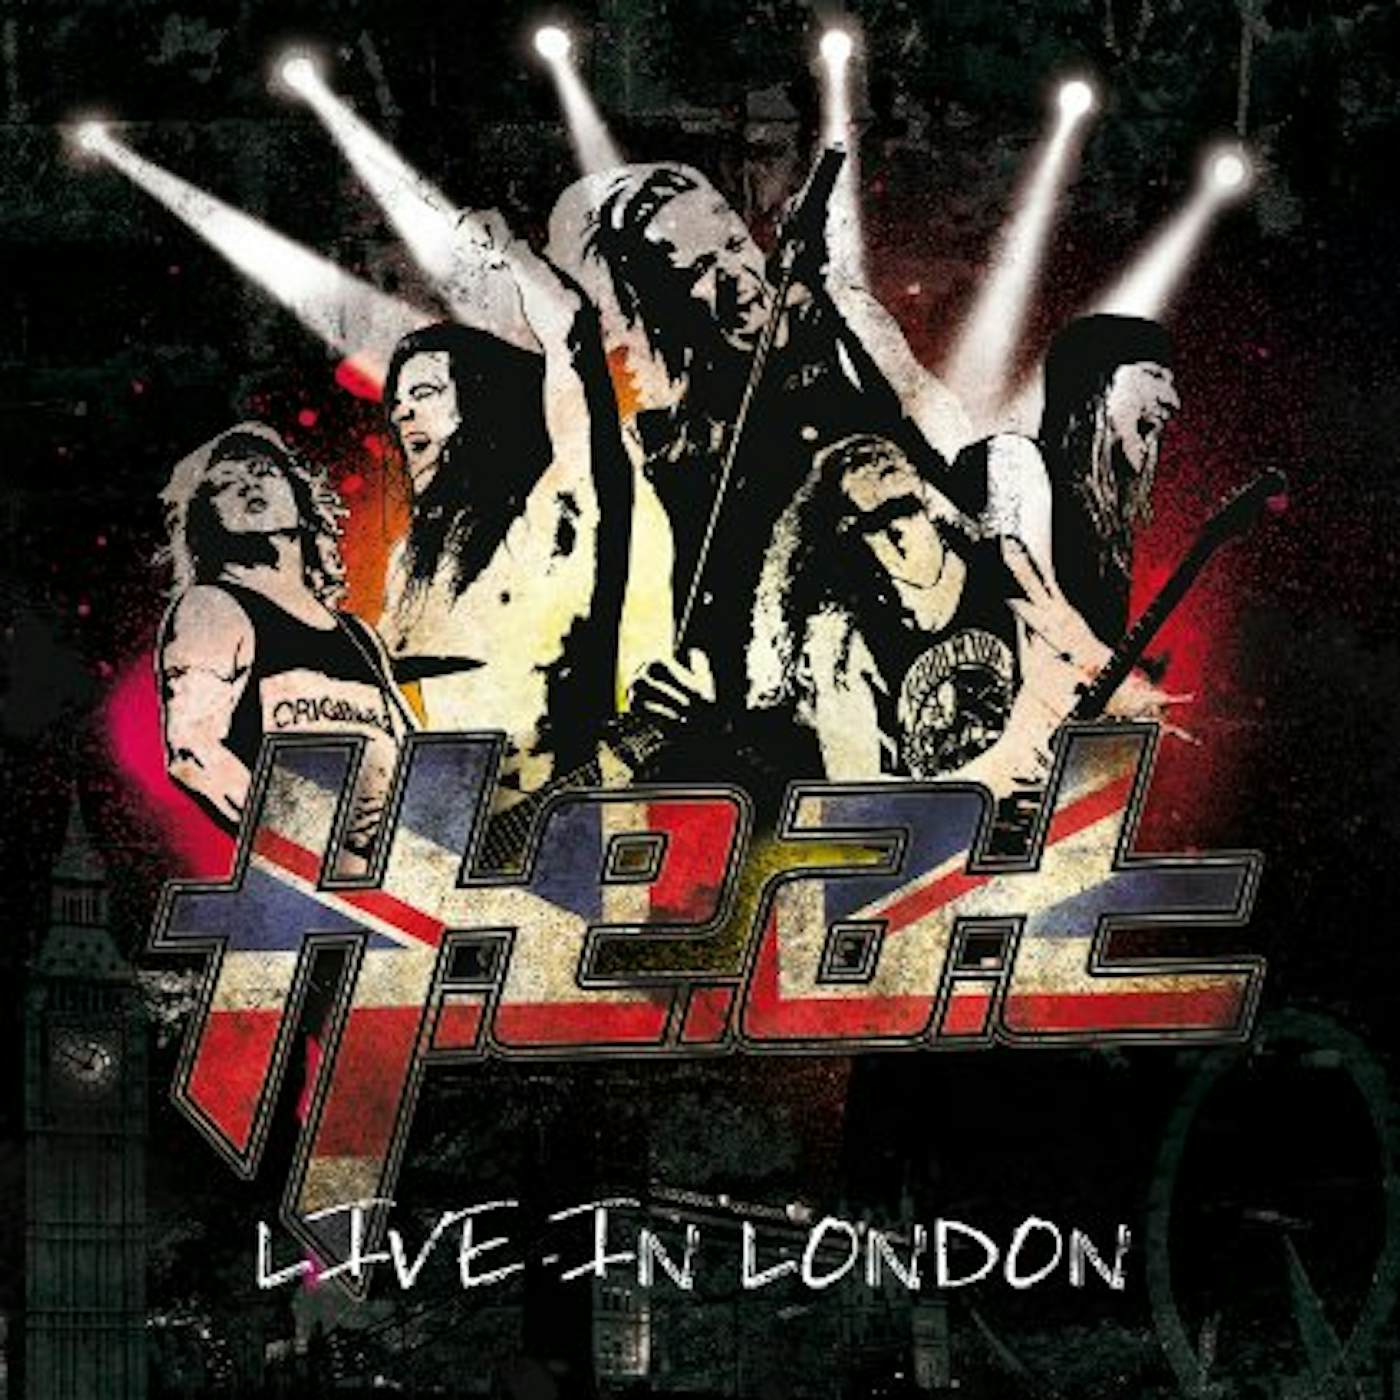 H.E.A.T LIVE IN LONDON CD